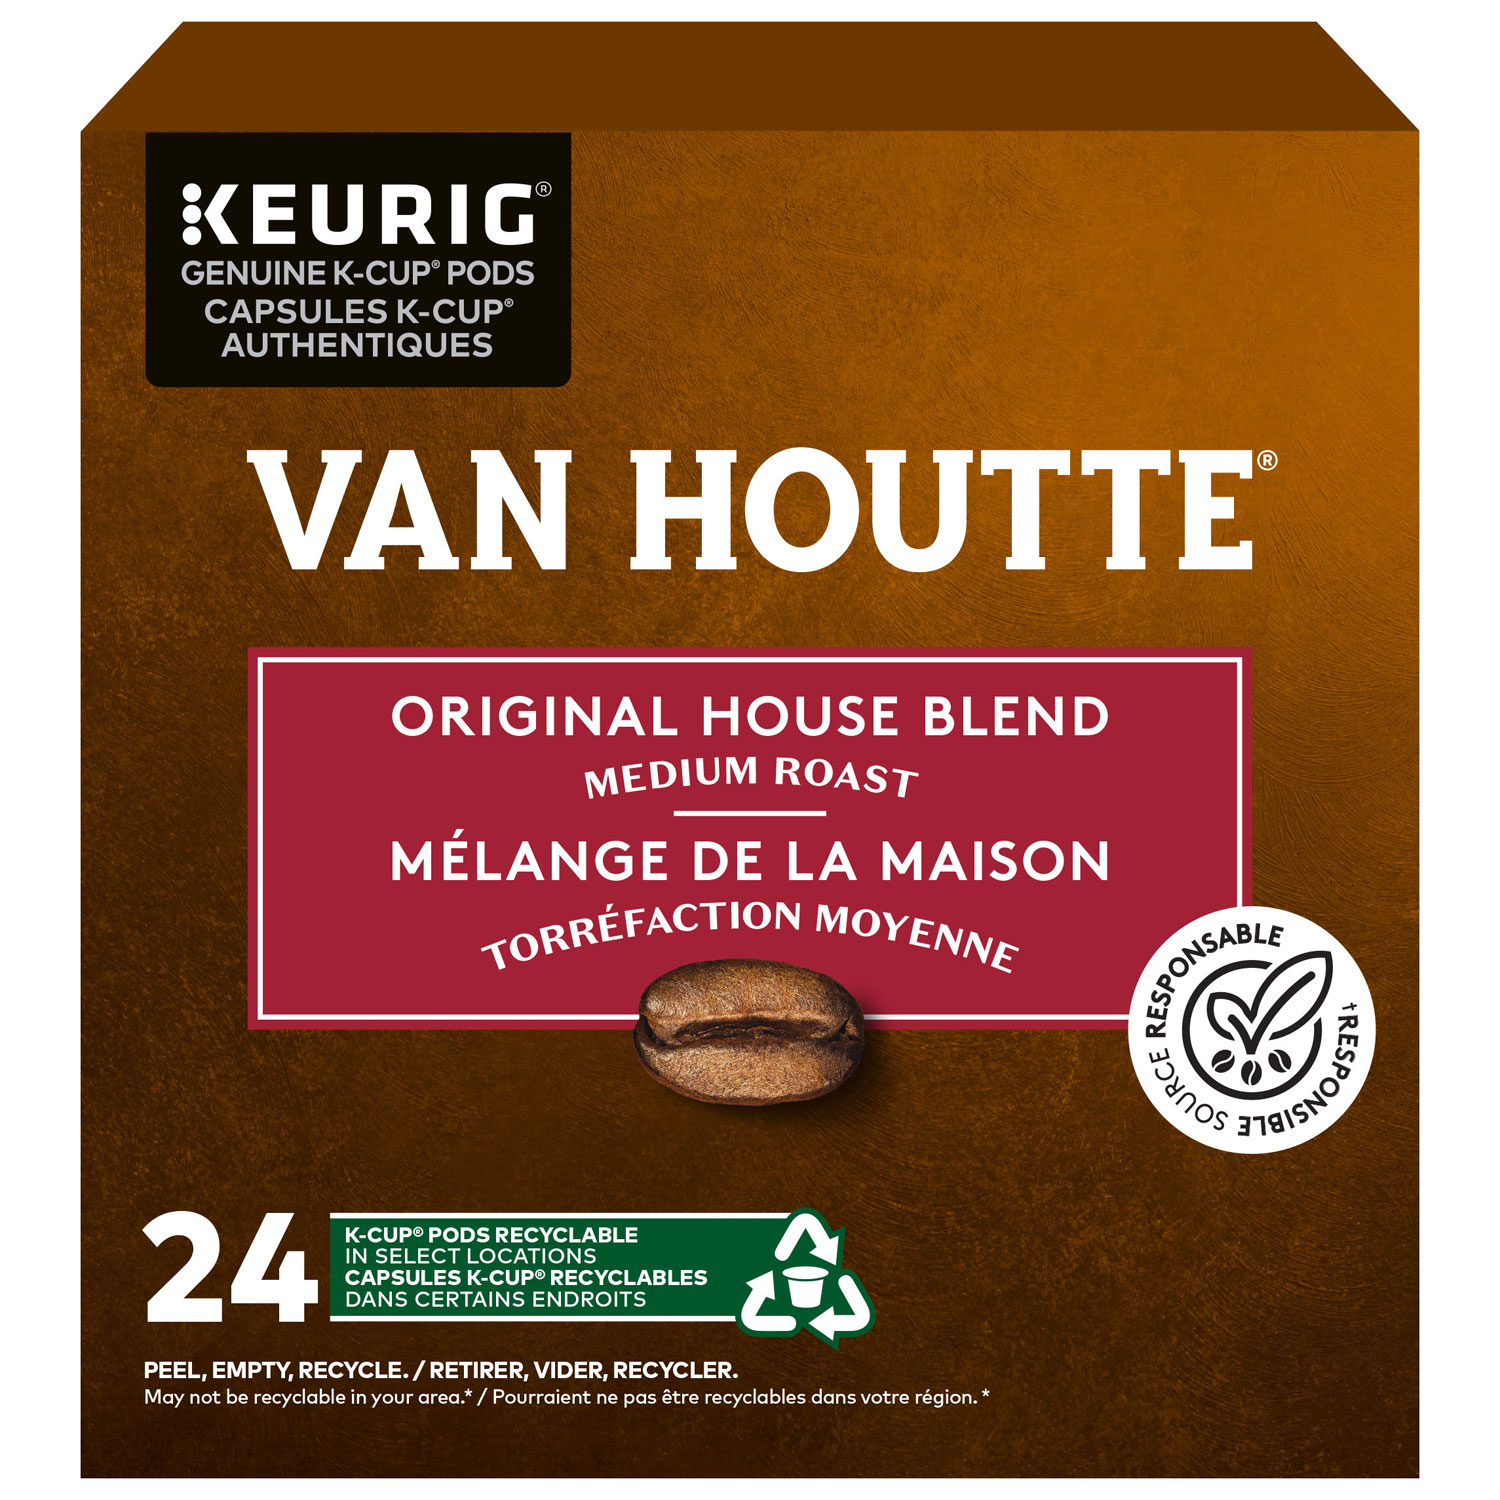 Van Houtte Medium Roast Original House Blend K-Cup Pod - 24 Pack